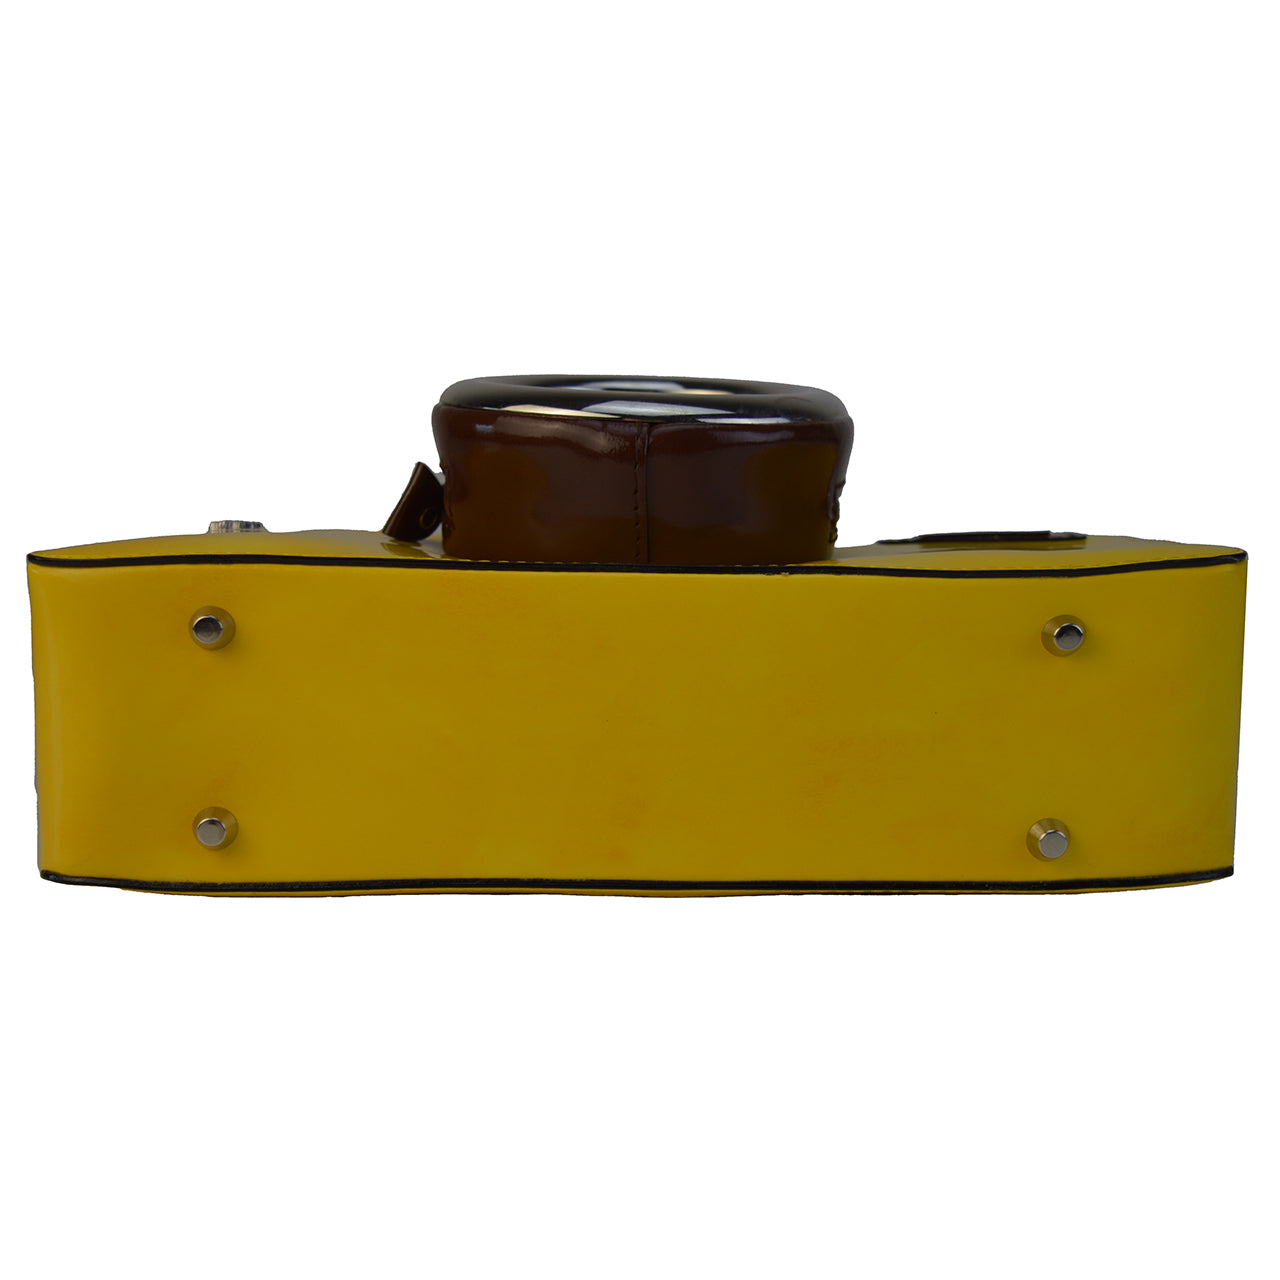 Pratesi Photocamera Radica Shoulder Bag in genuine Italian leather - Redica